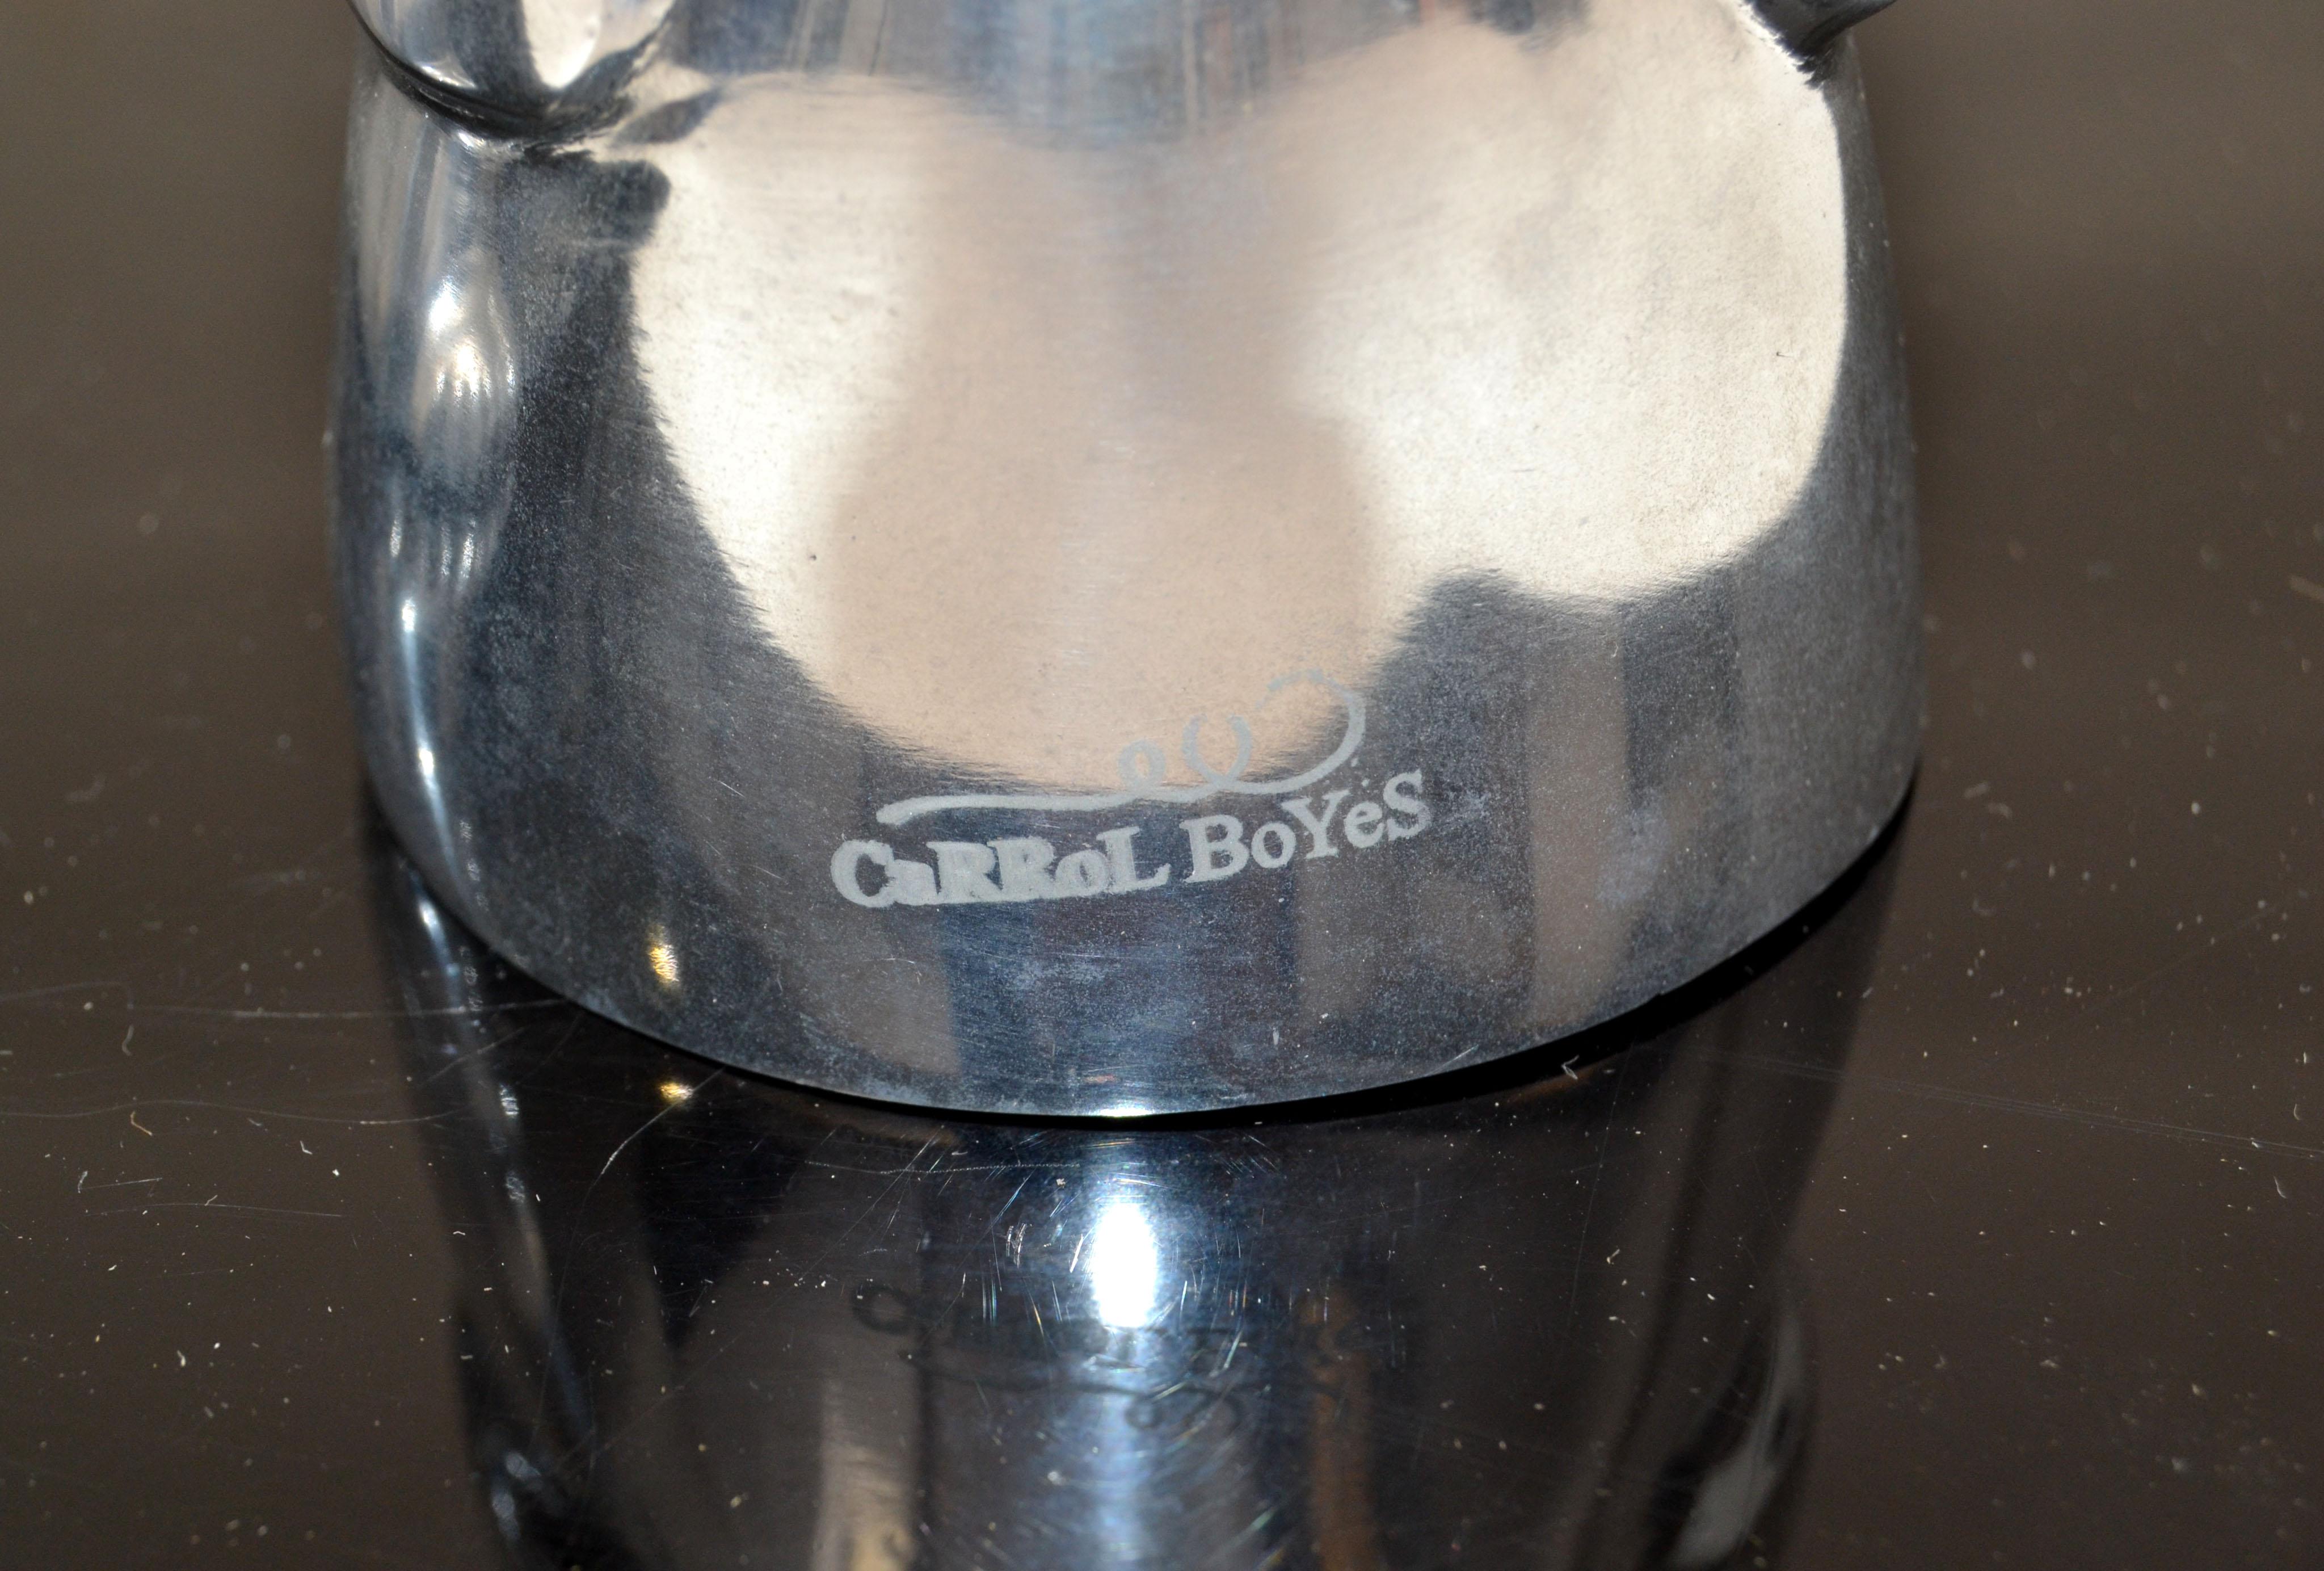 Carrol Boyes Man & Women Collectible 2 Aluminum Bottle & Stopper Vessel Barware  For Sale 3